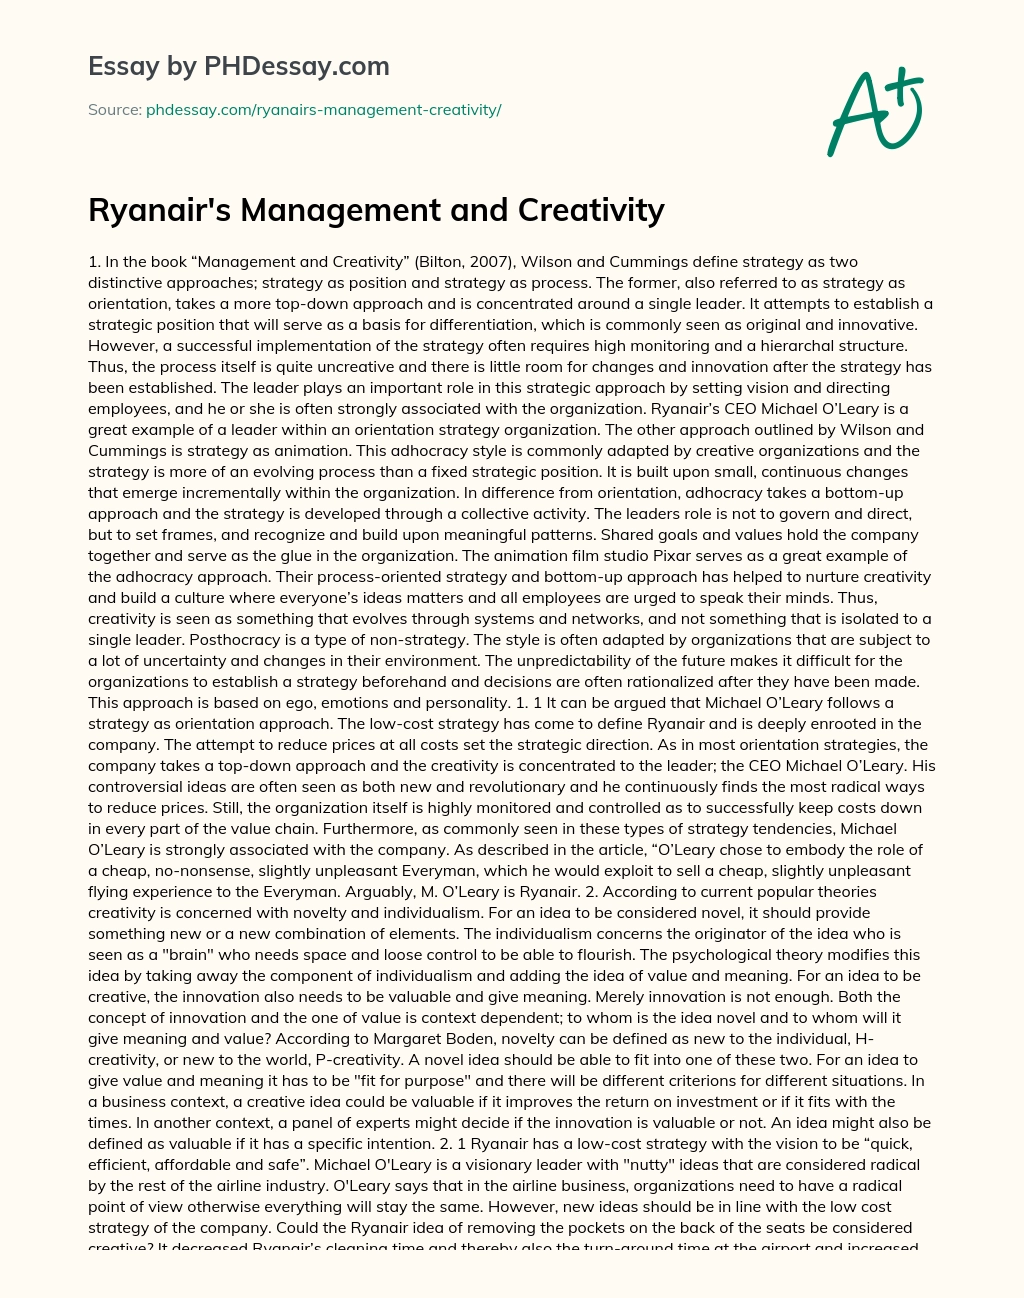 Ryanair’s Management and Creativity essay